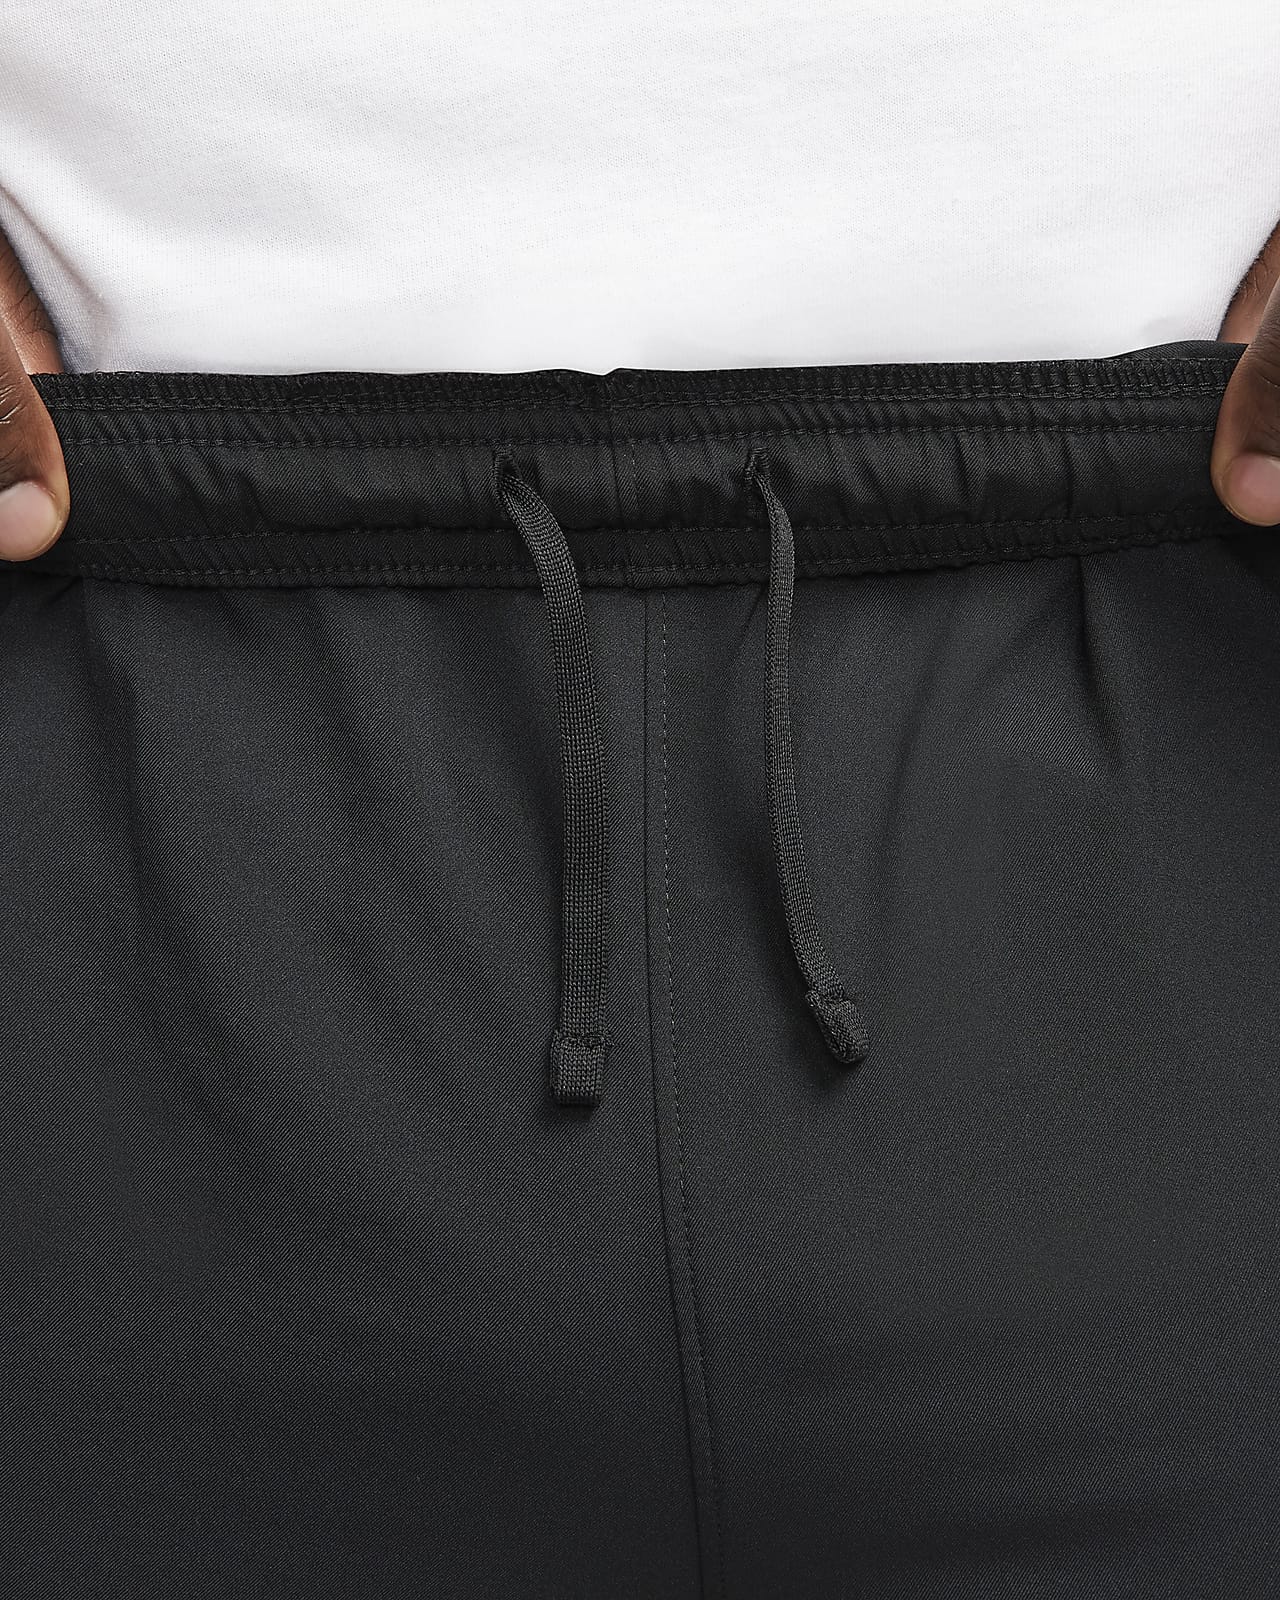  Nike Dri-FIT Challenger Men's Woven Running Pants